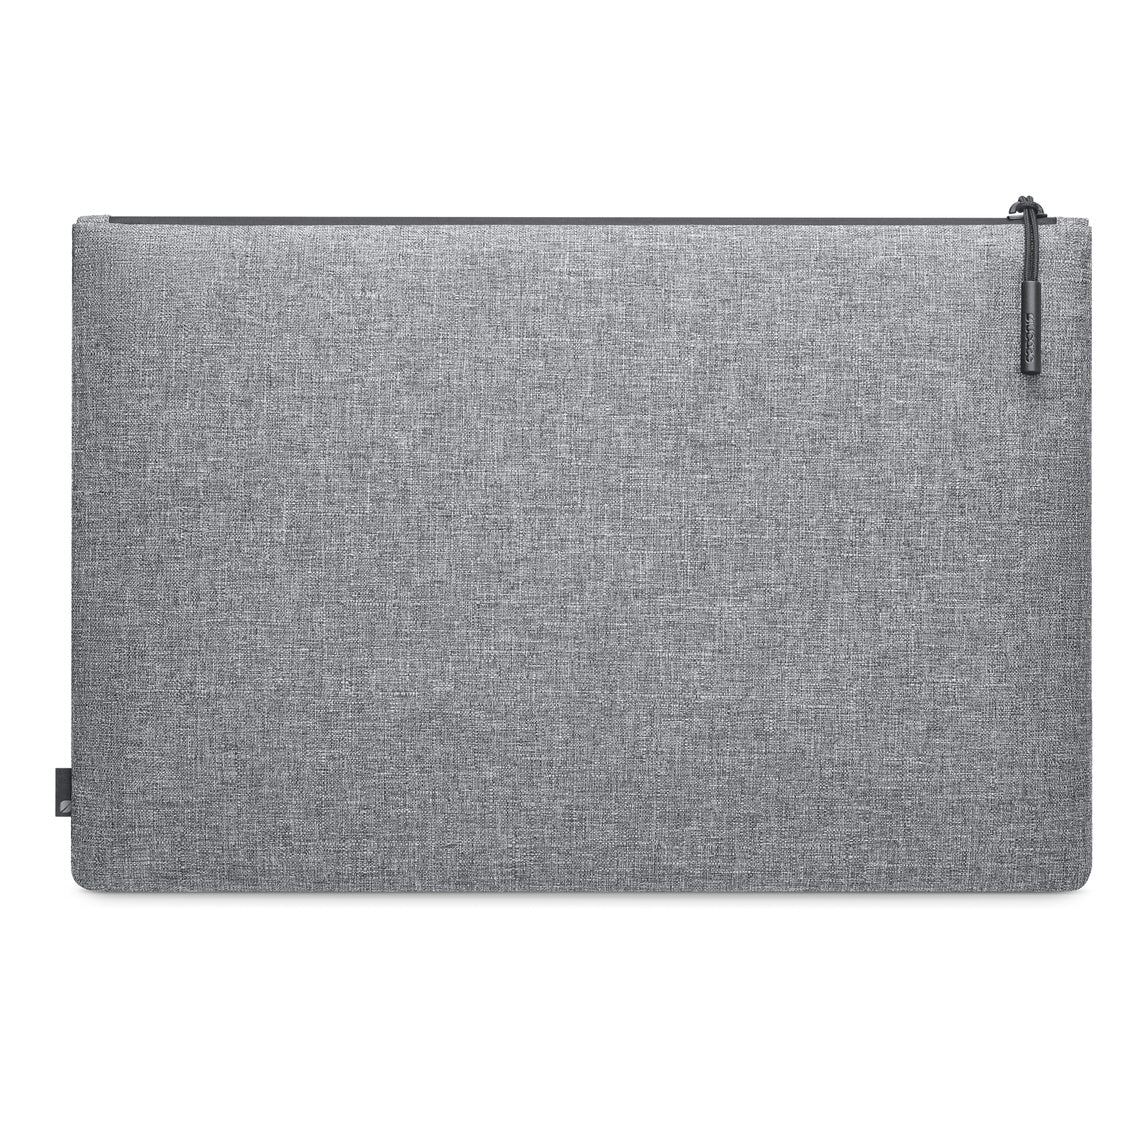 Incase Original Flat Laptop Sleeves